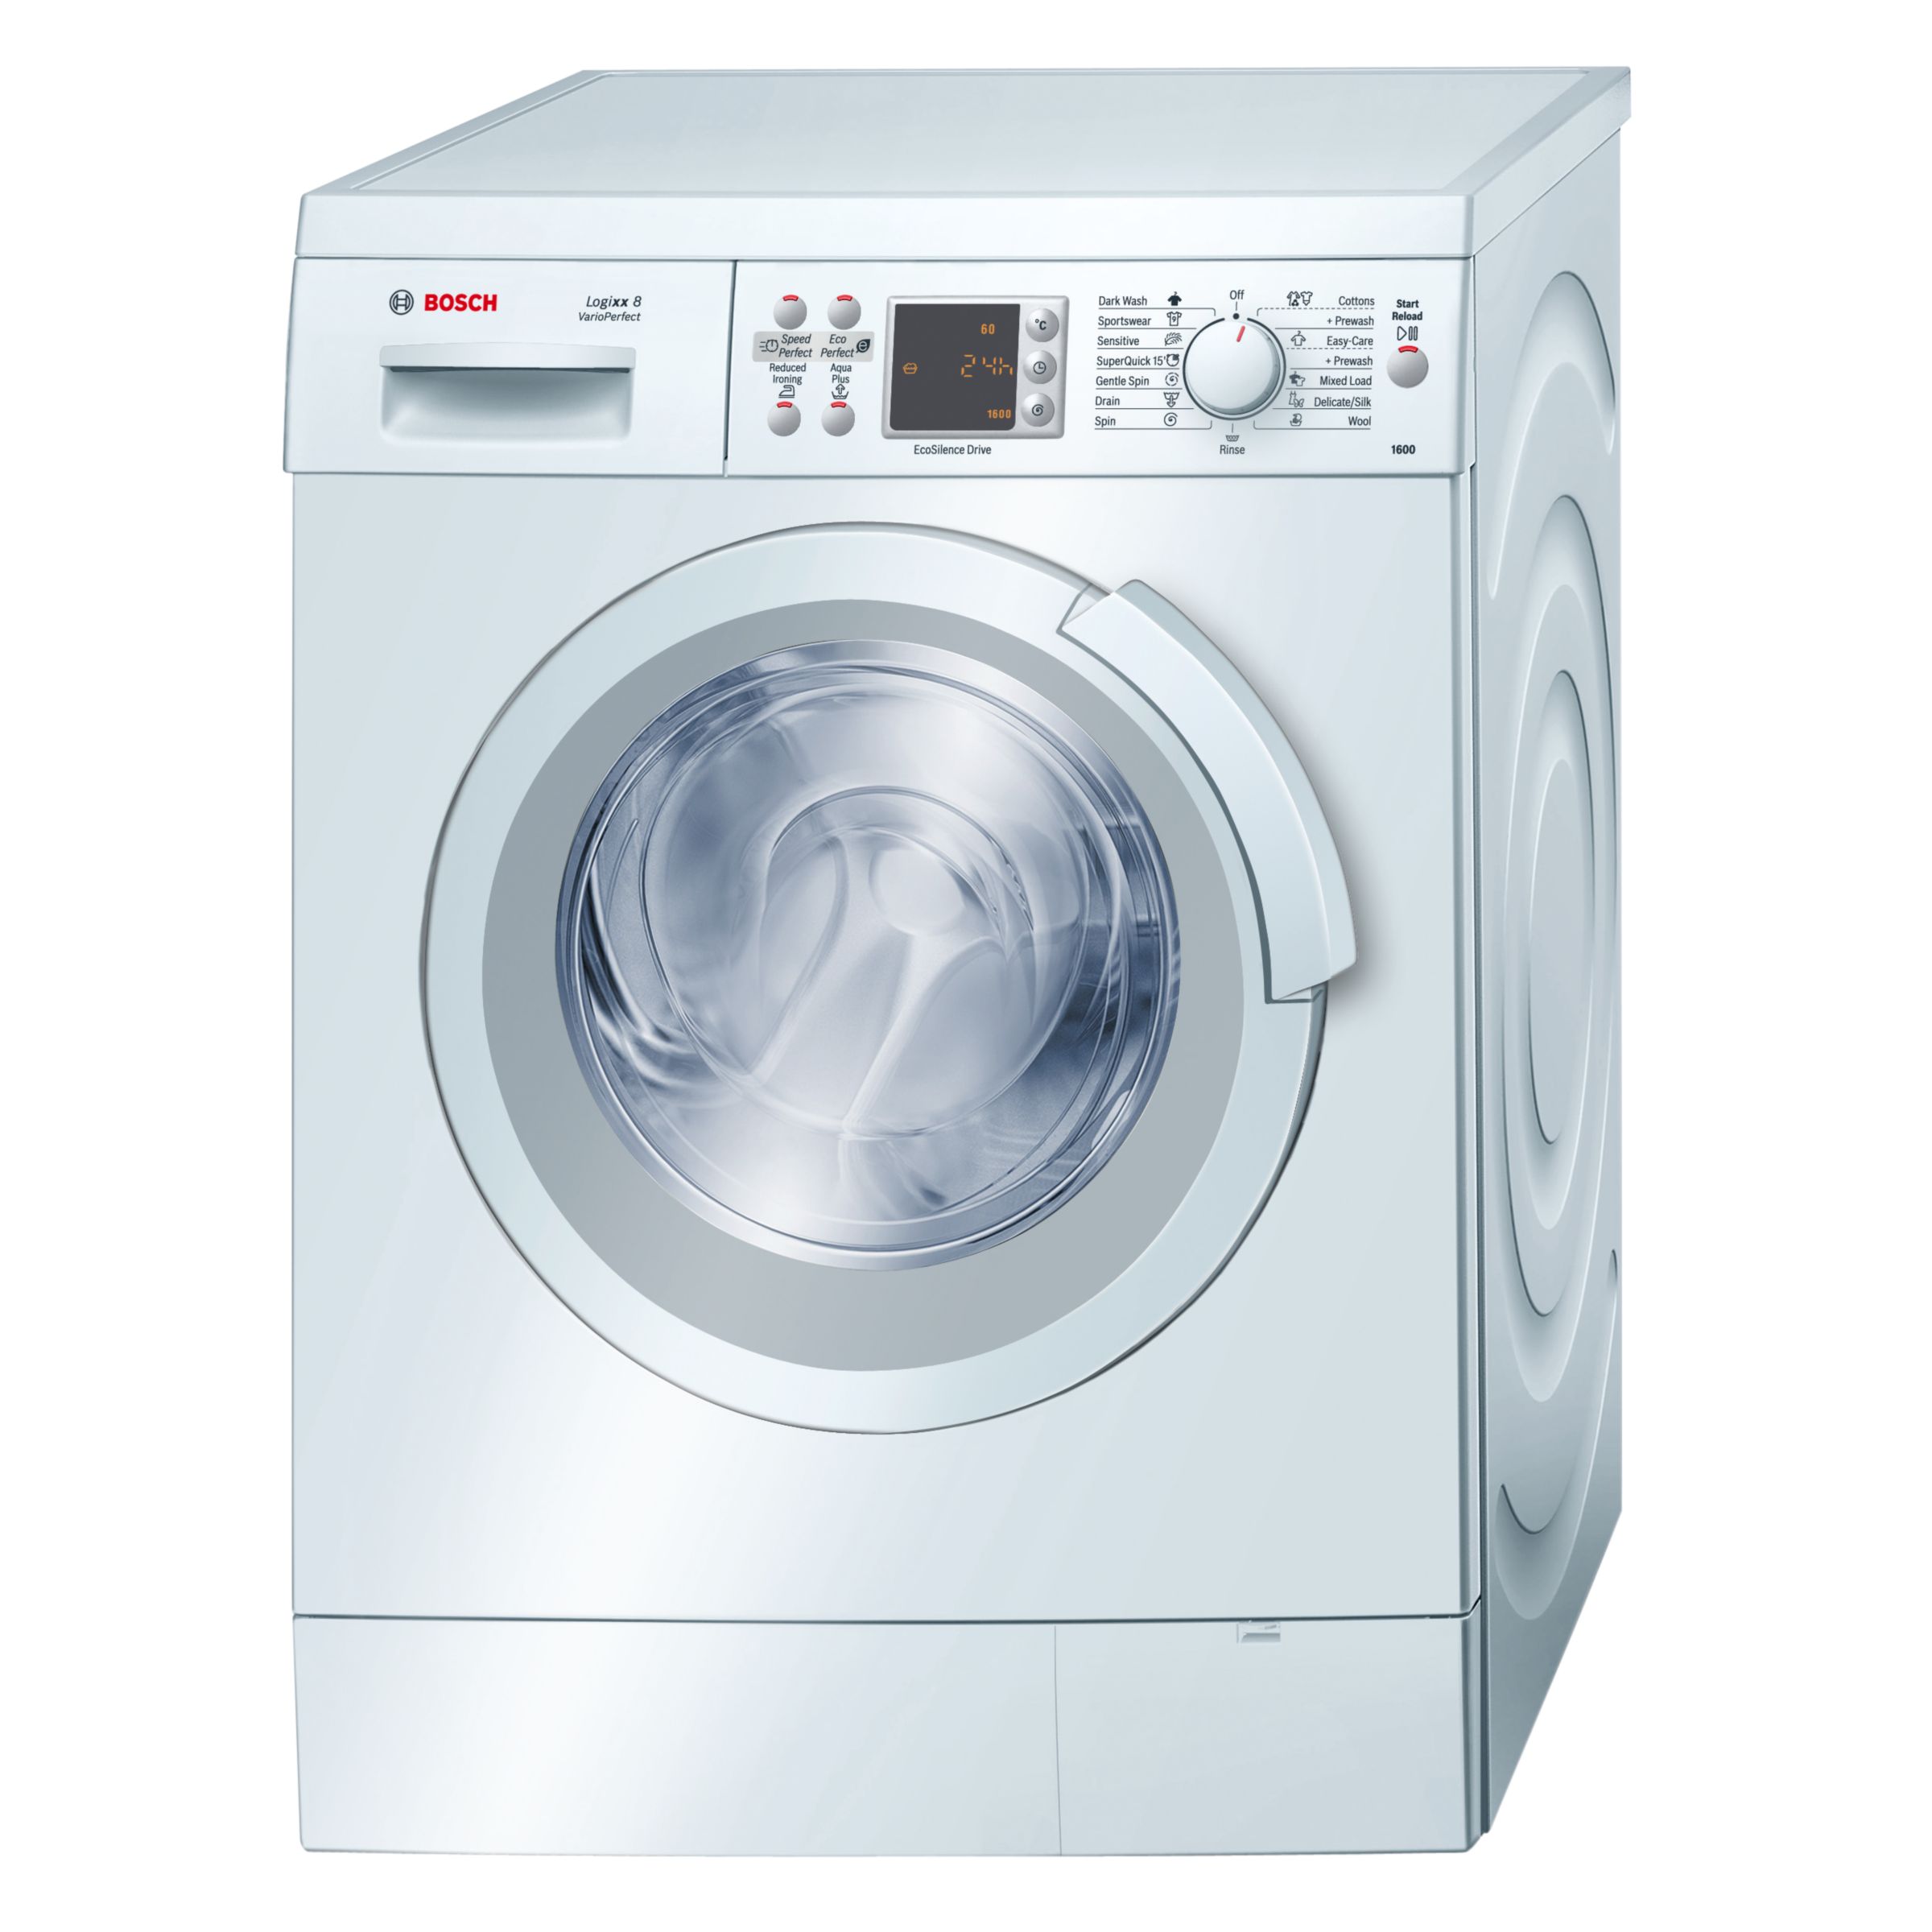 Bosch Logixx WAS32460GB Washing Machine, White at John Lewis